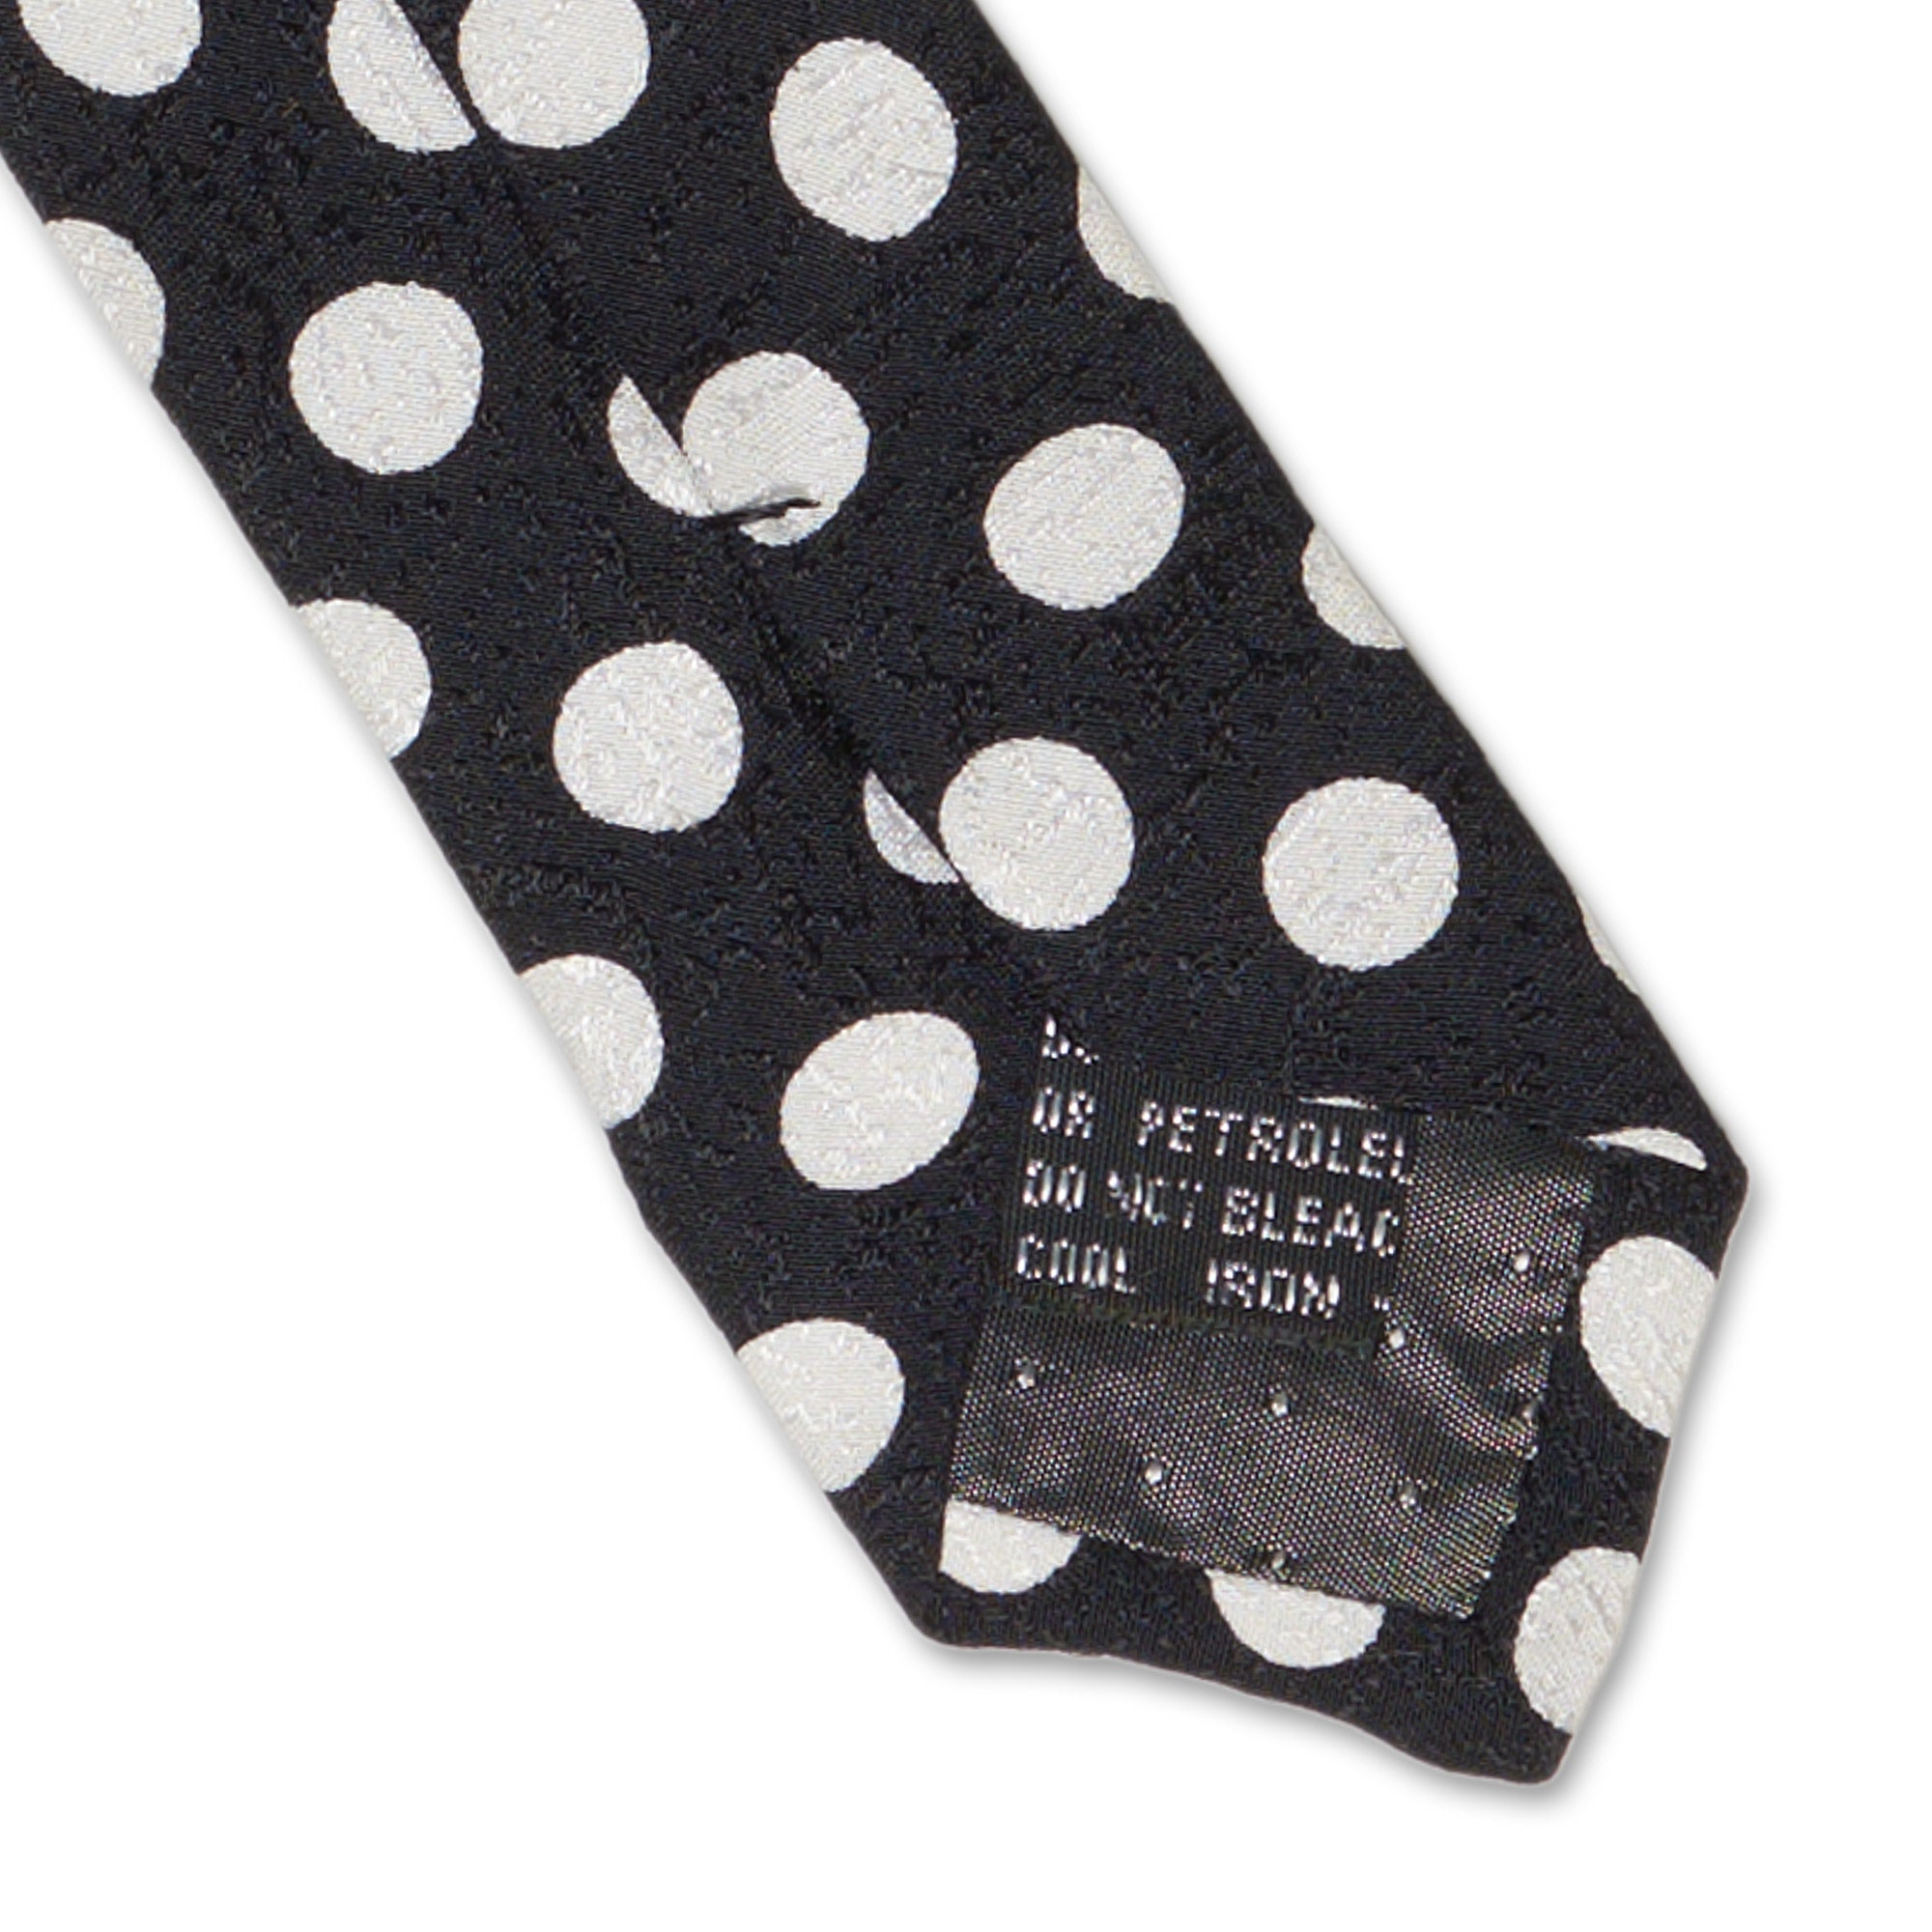 GIANNI VERSACE Handmade Multicolored Geometric Polka Dot Design Silk Tie